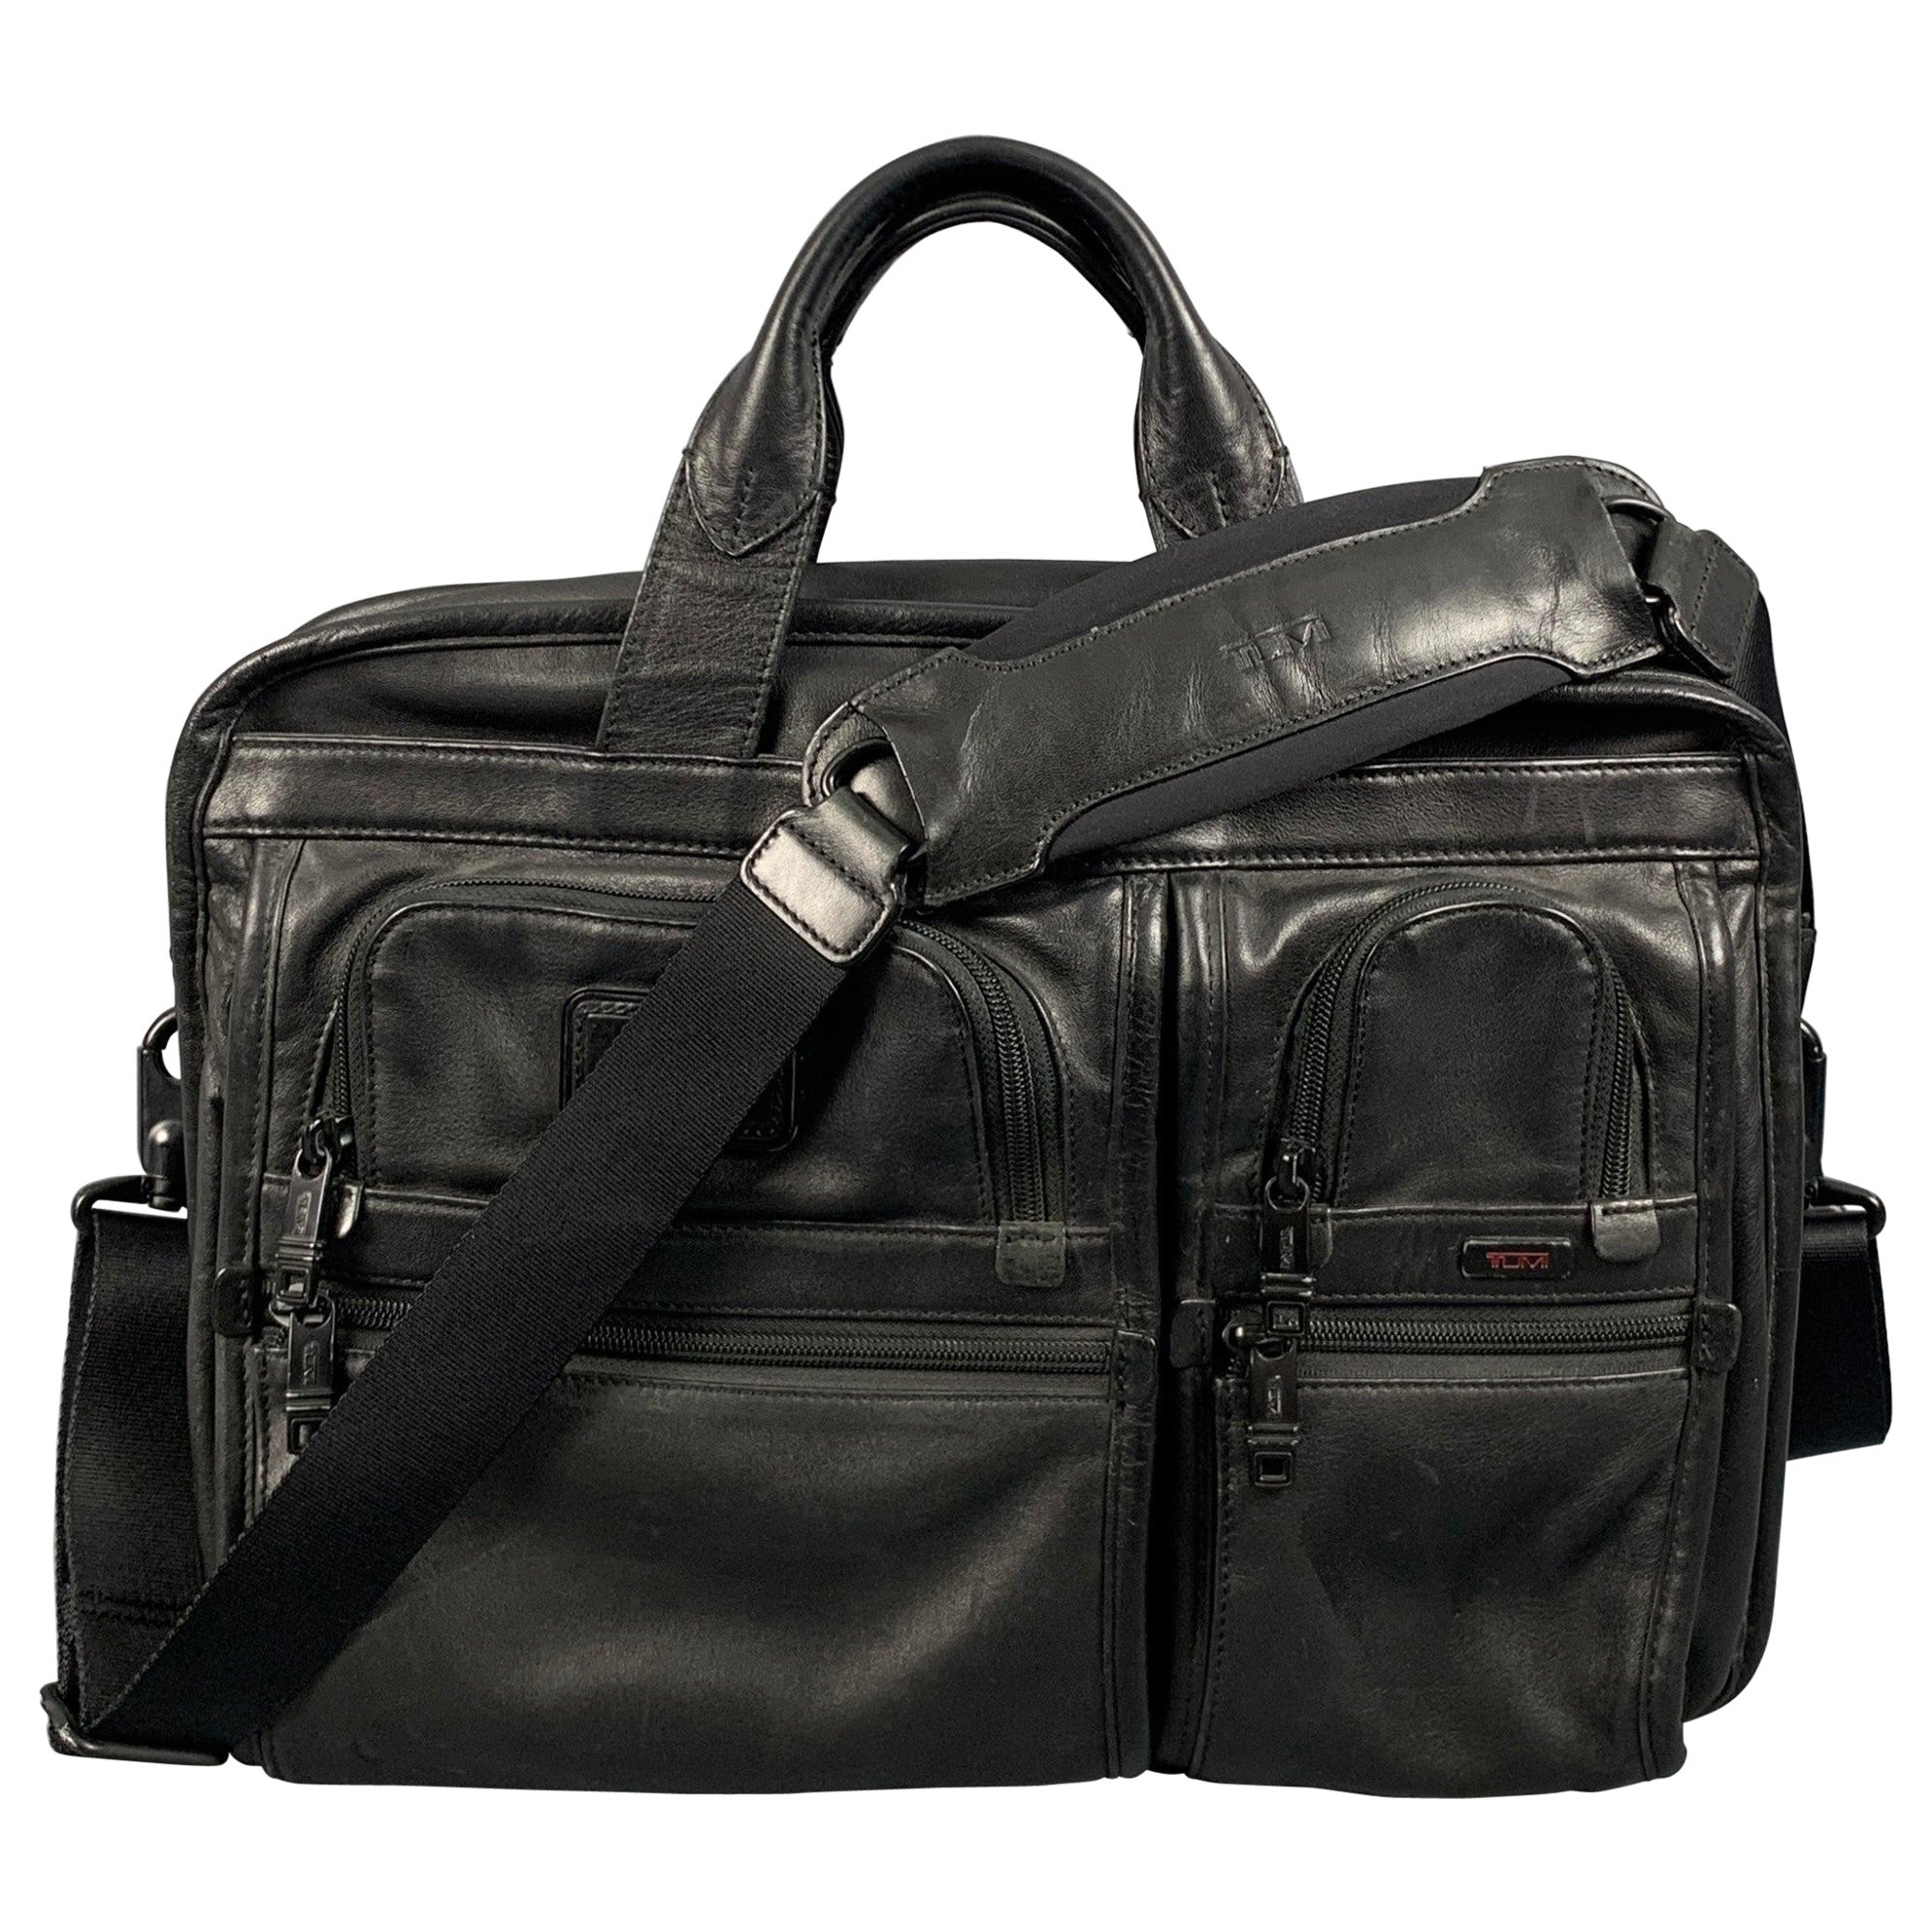 TUMI Grey Leather Briefcase Bag